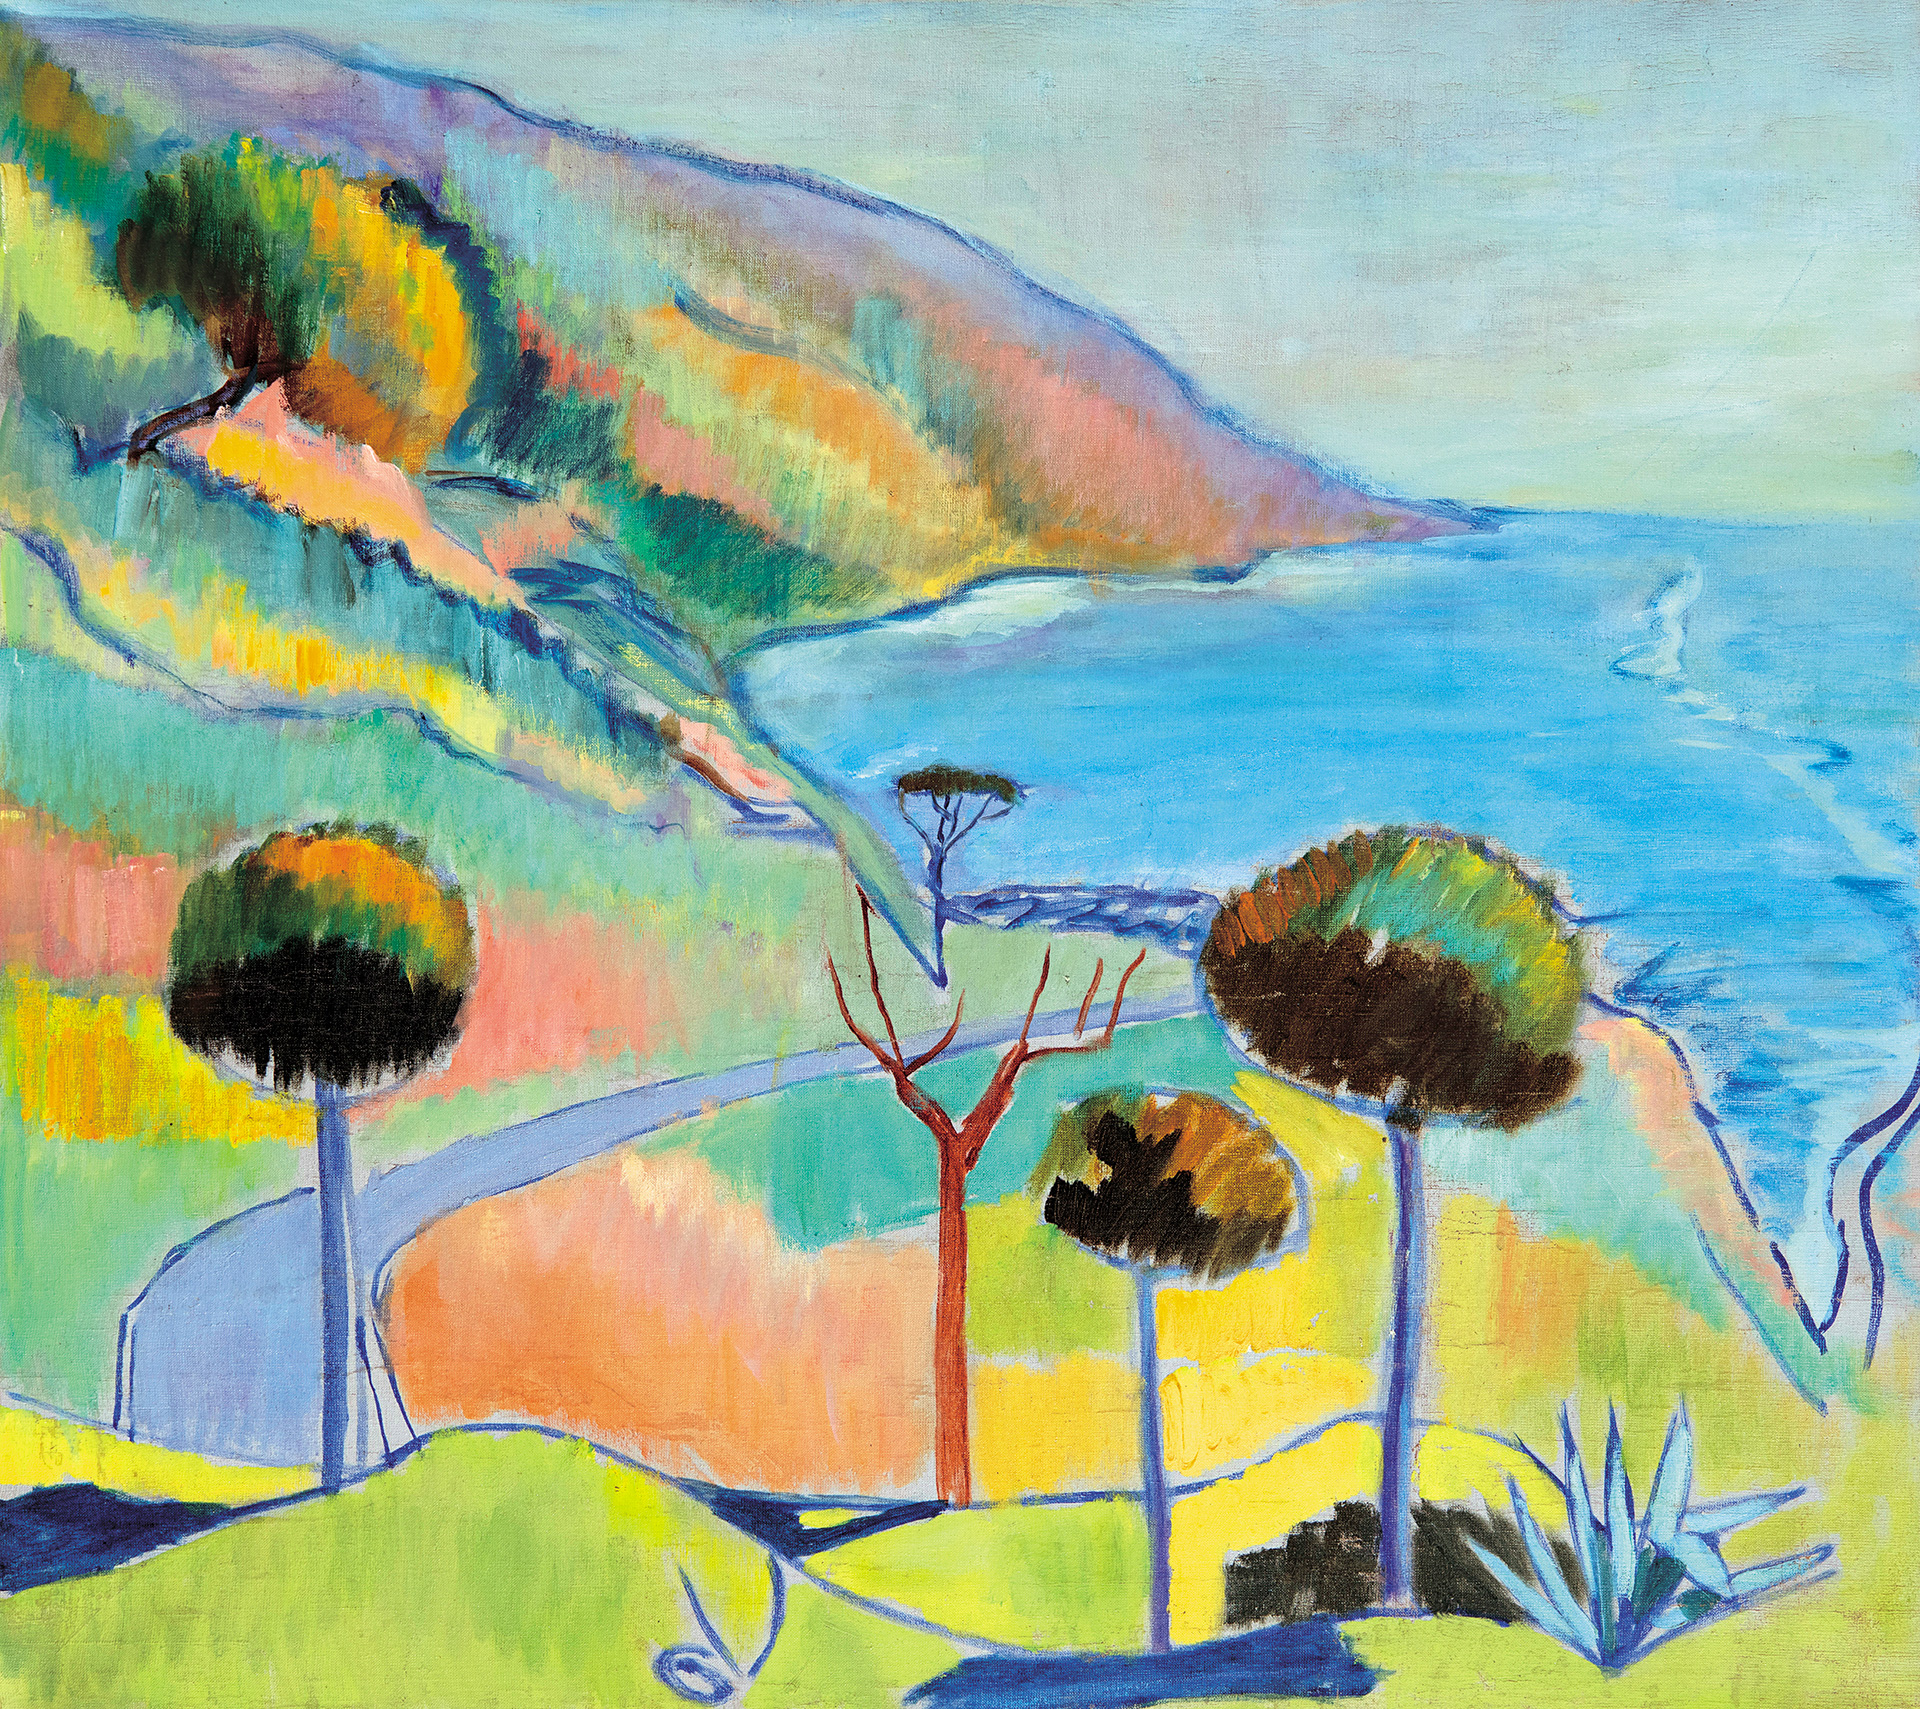 Fenyő György (1904-1978) Landscape in Southern France, around 1929-1930